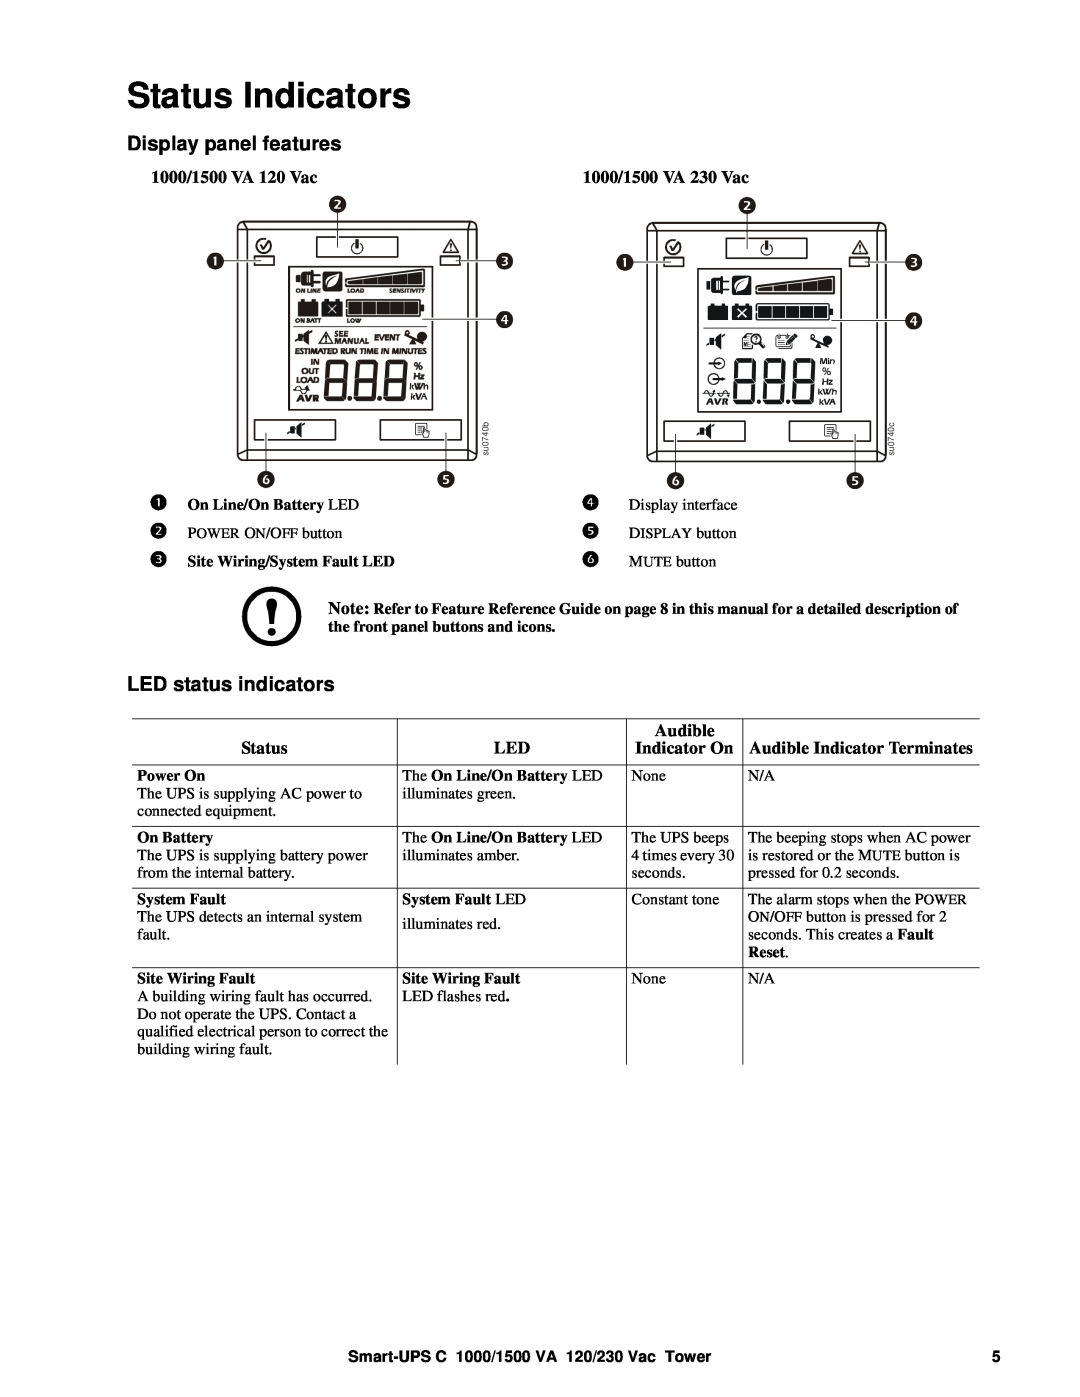 APC SMC1000 Status Indicators, Display panel features, LED status indicators, Smart-UPS C 1000/1500 VA 120/230 Vac Tower 